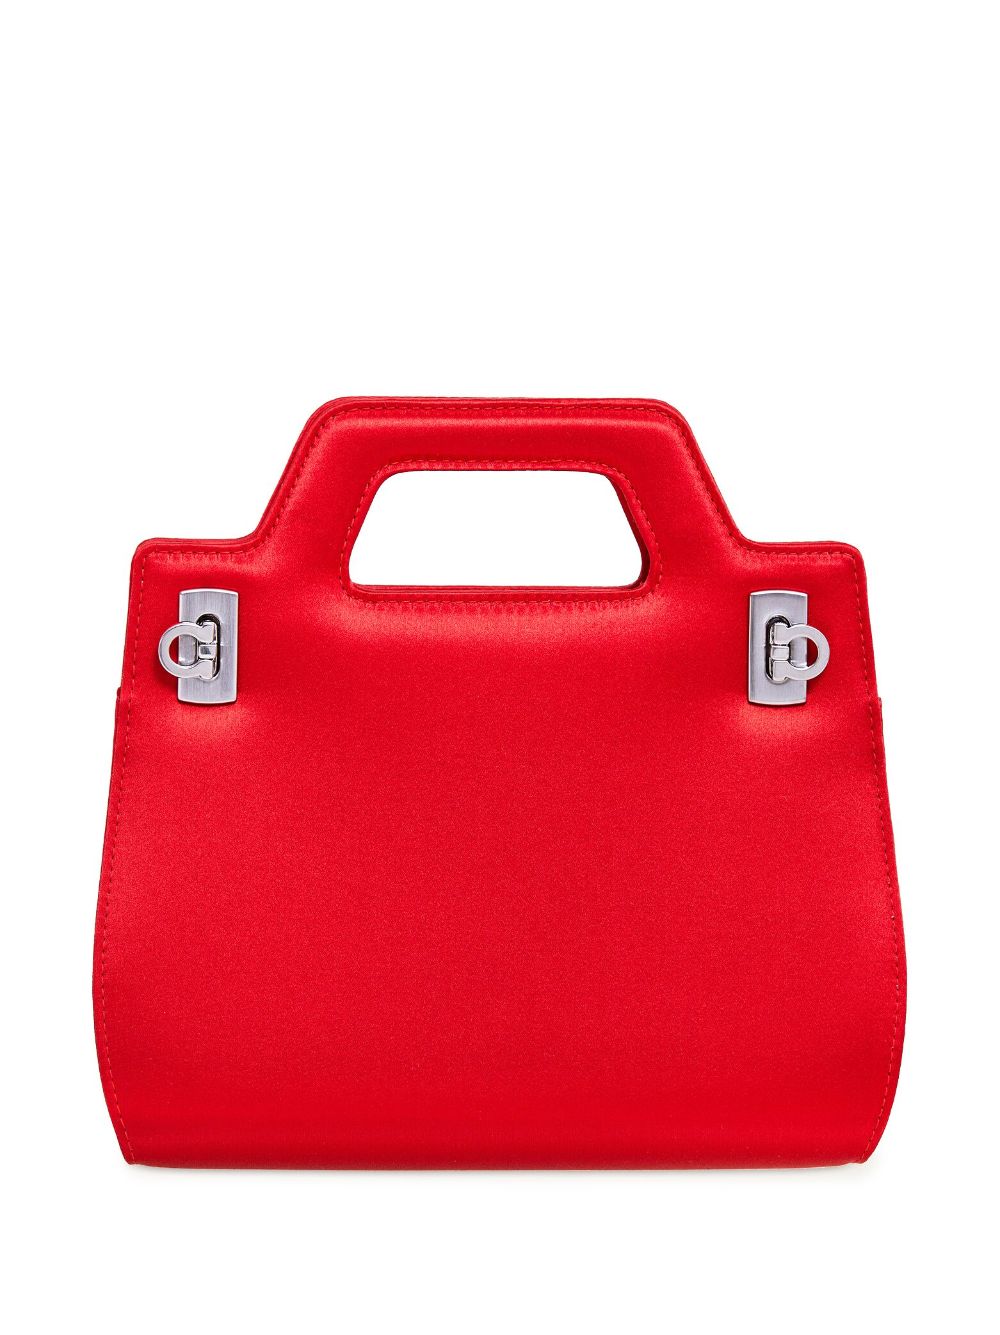 Ferragamo Mini Wanda Leather Shoulder Bag In Flame Red/candy Apple Red